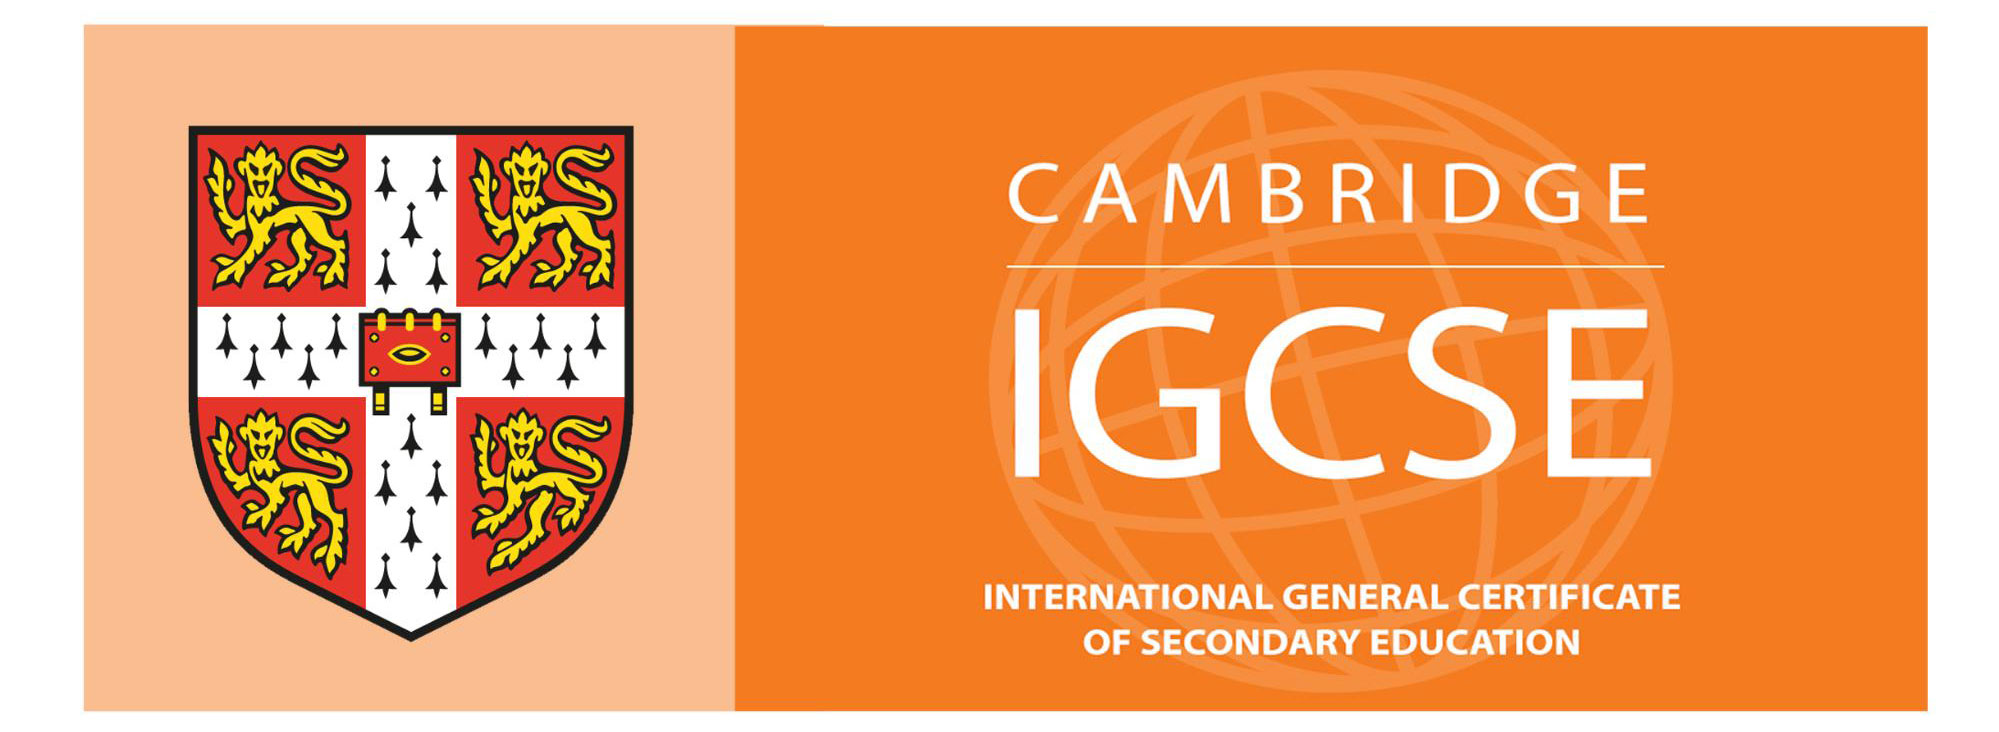 IGCSE Accreditation Logo - CCS is IGCSE Accredited